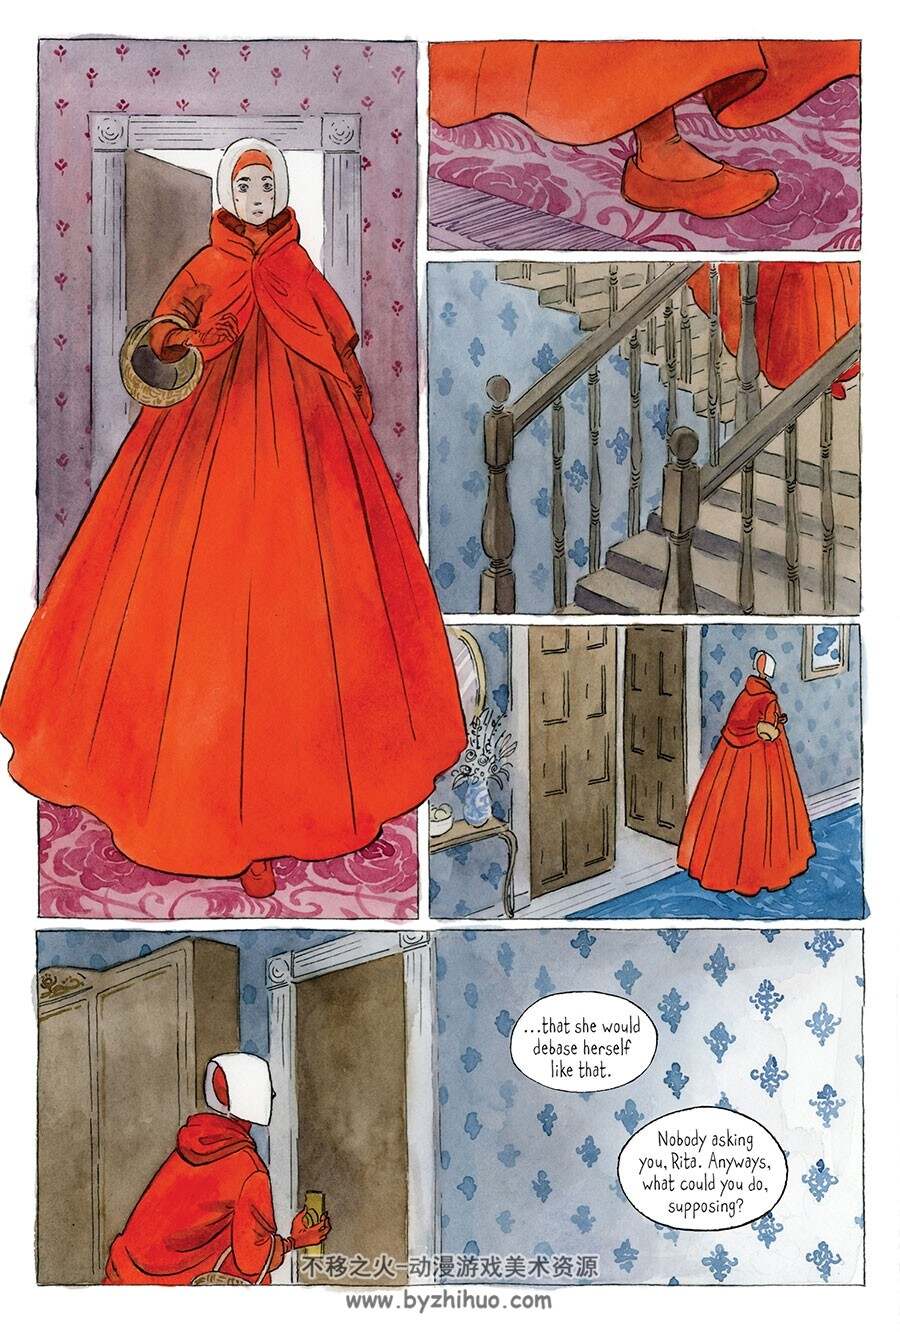 The Handmaids Tale The Graphic Novel 漫画 百度网盘下载